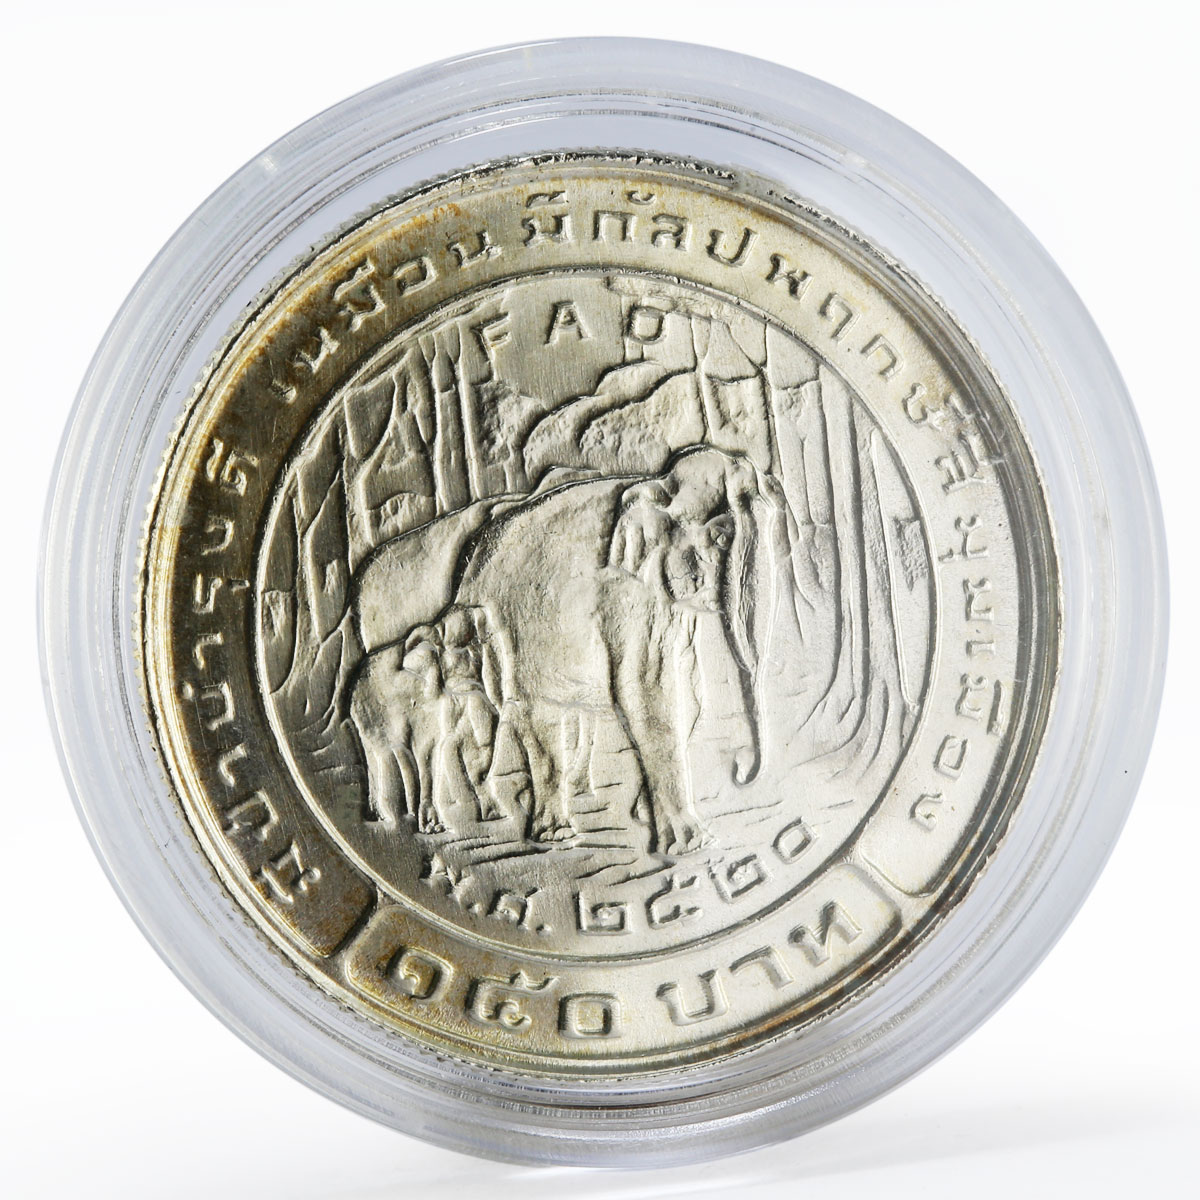 Thailand 150 Baht FAO Elephant silver coin 1977